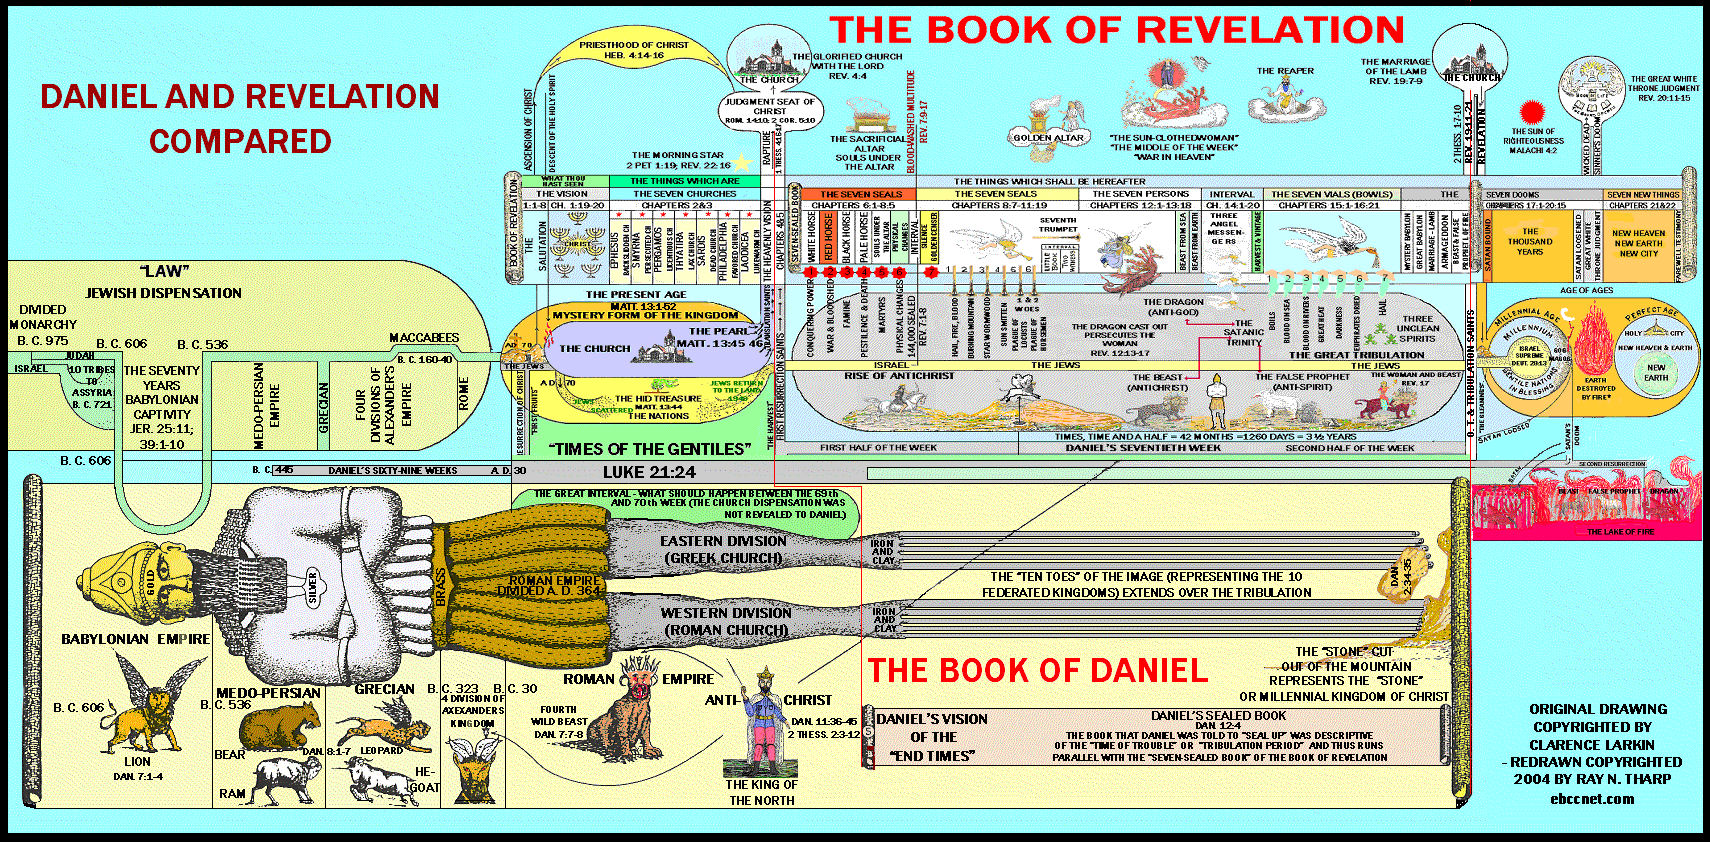 Daniel and Revelation compared